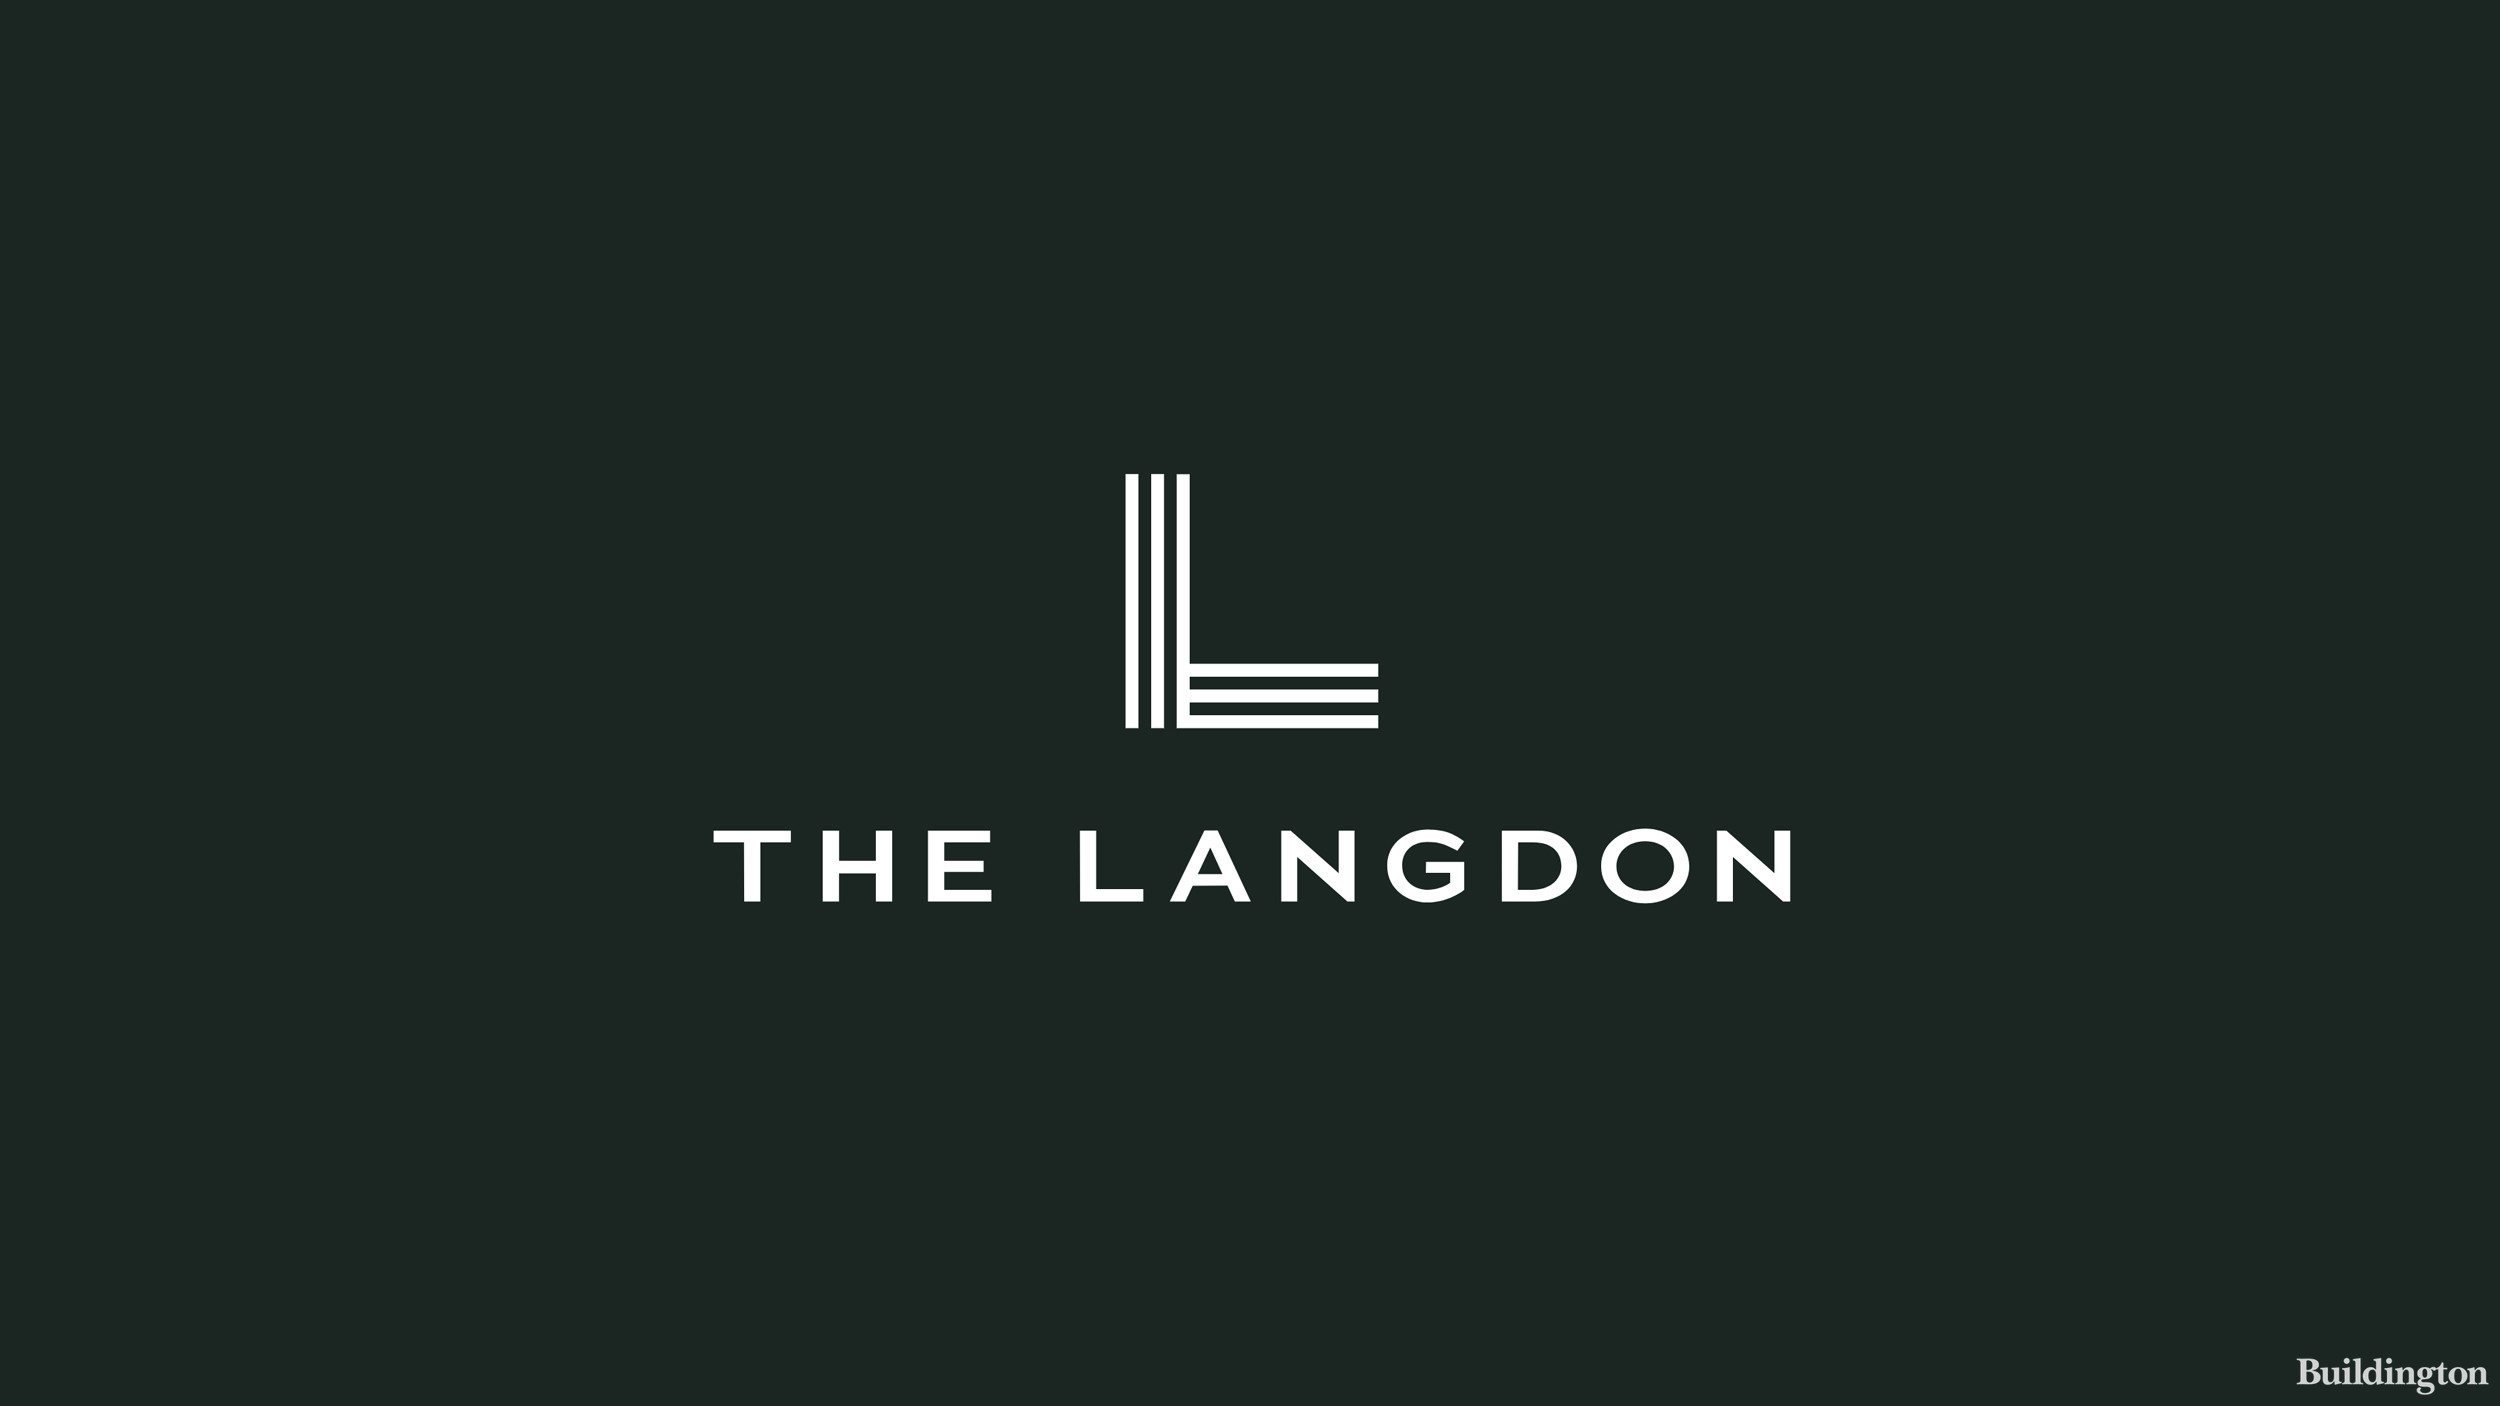 The Langdon development logo cover